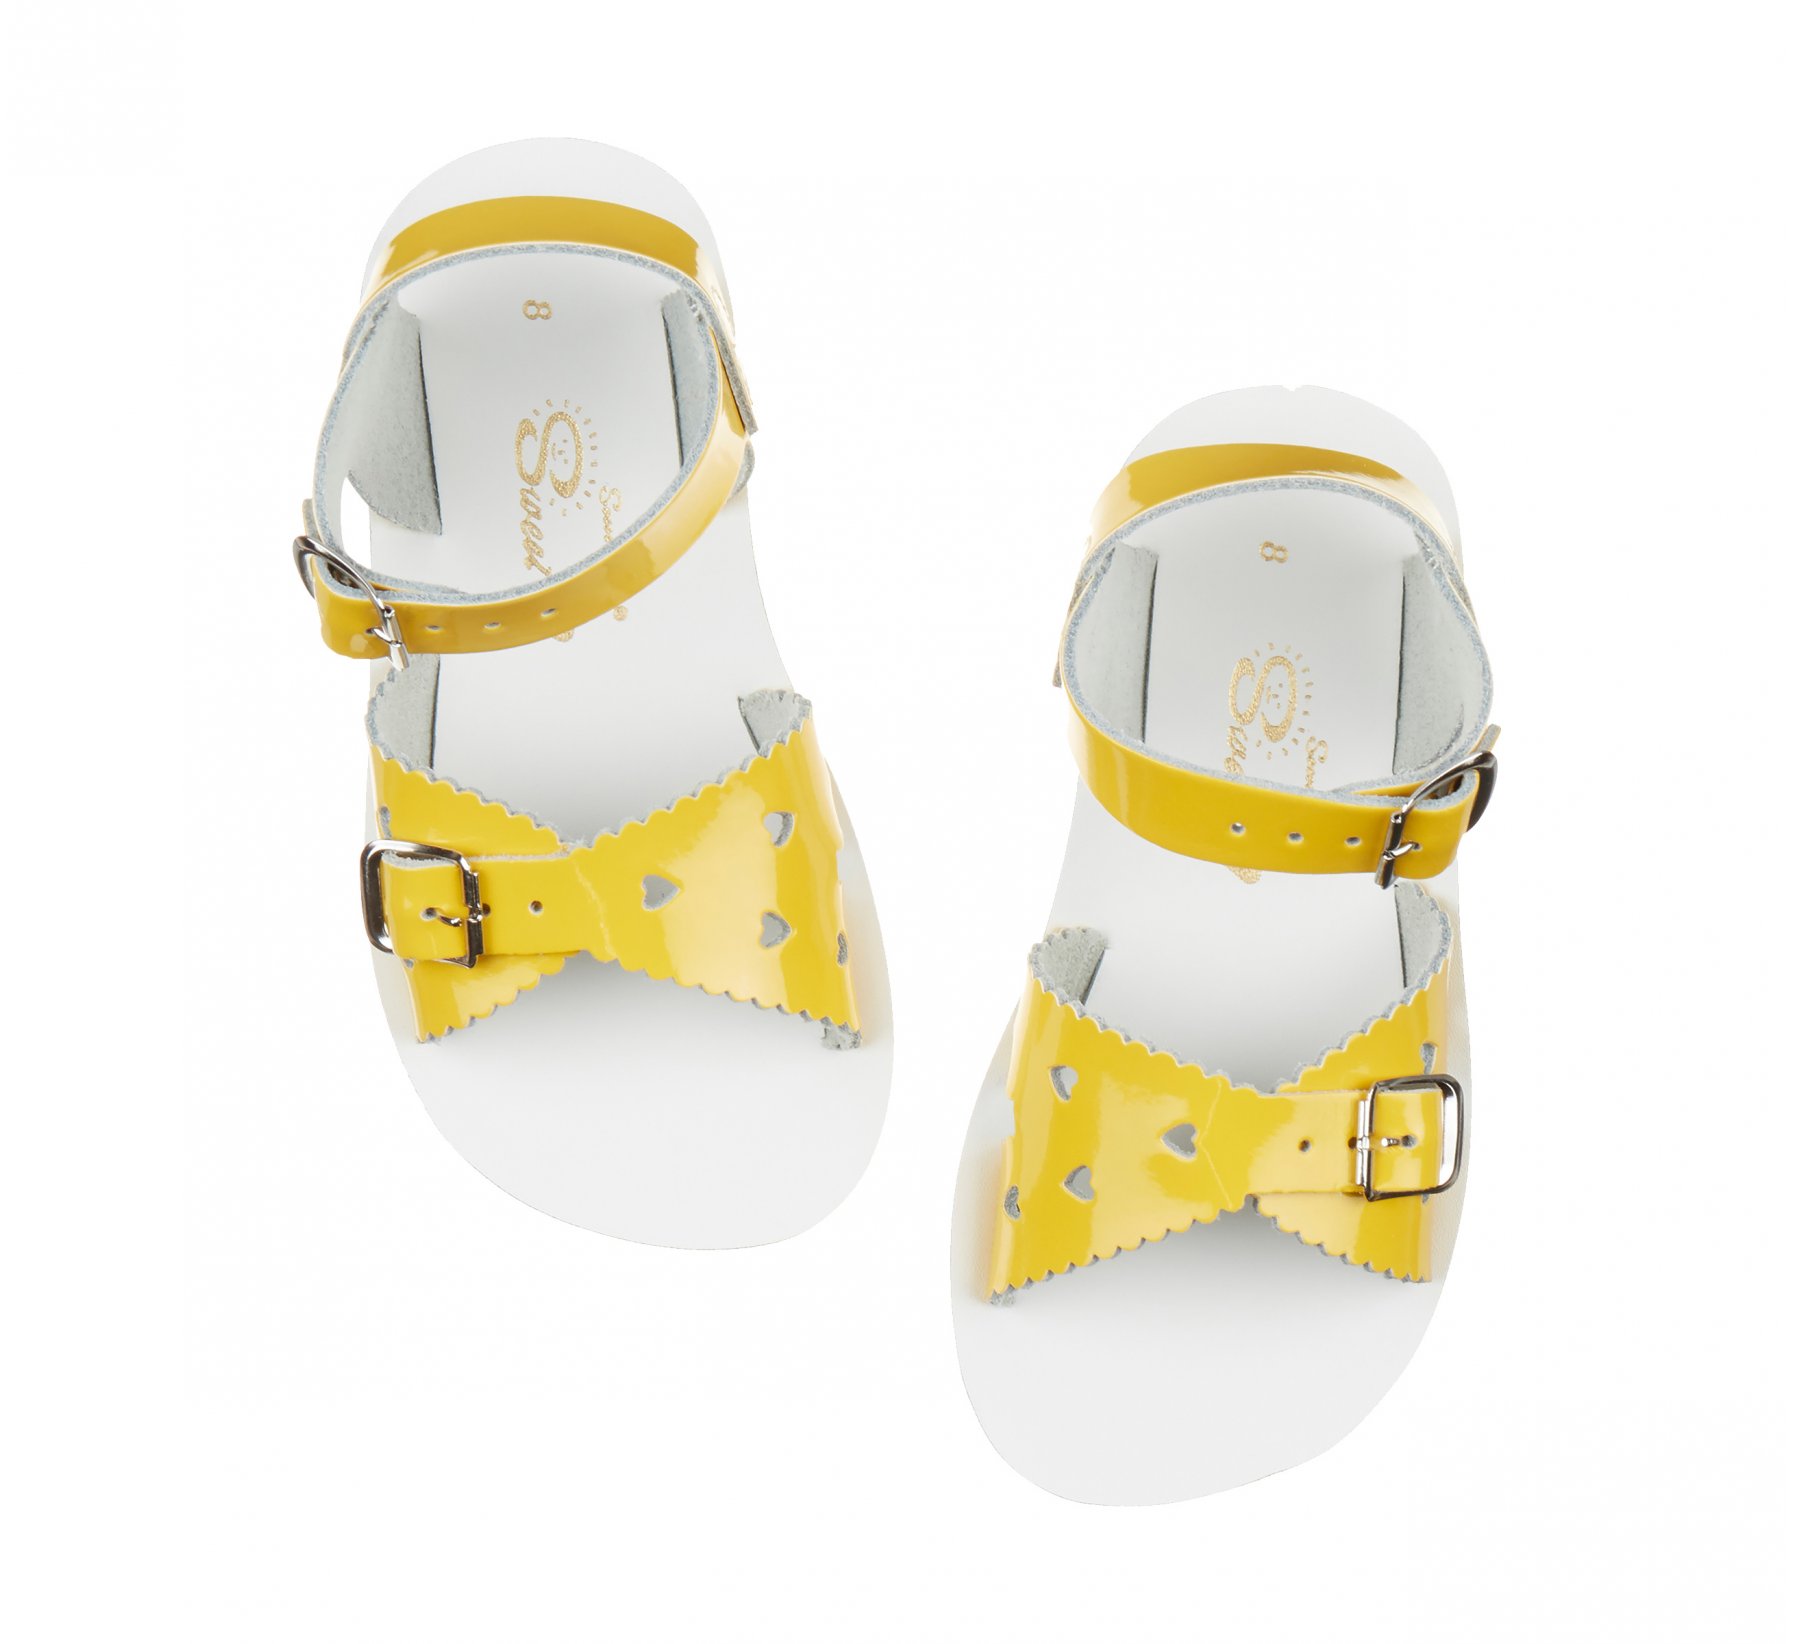 Sweetheart Shiny Yellow Kids Sandals - Salt Water Sandals